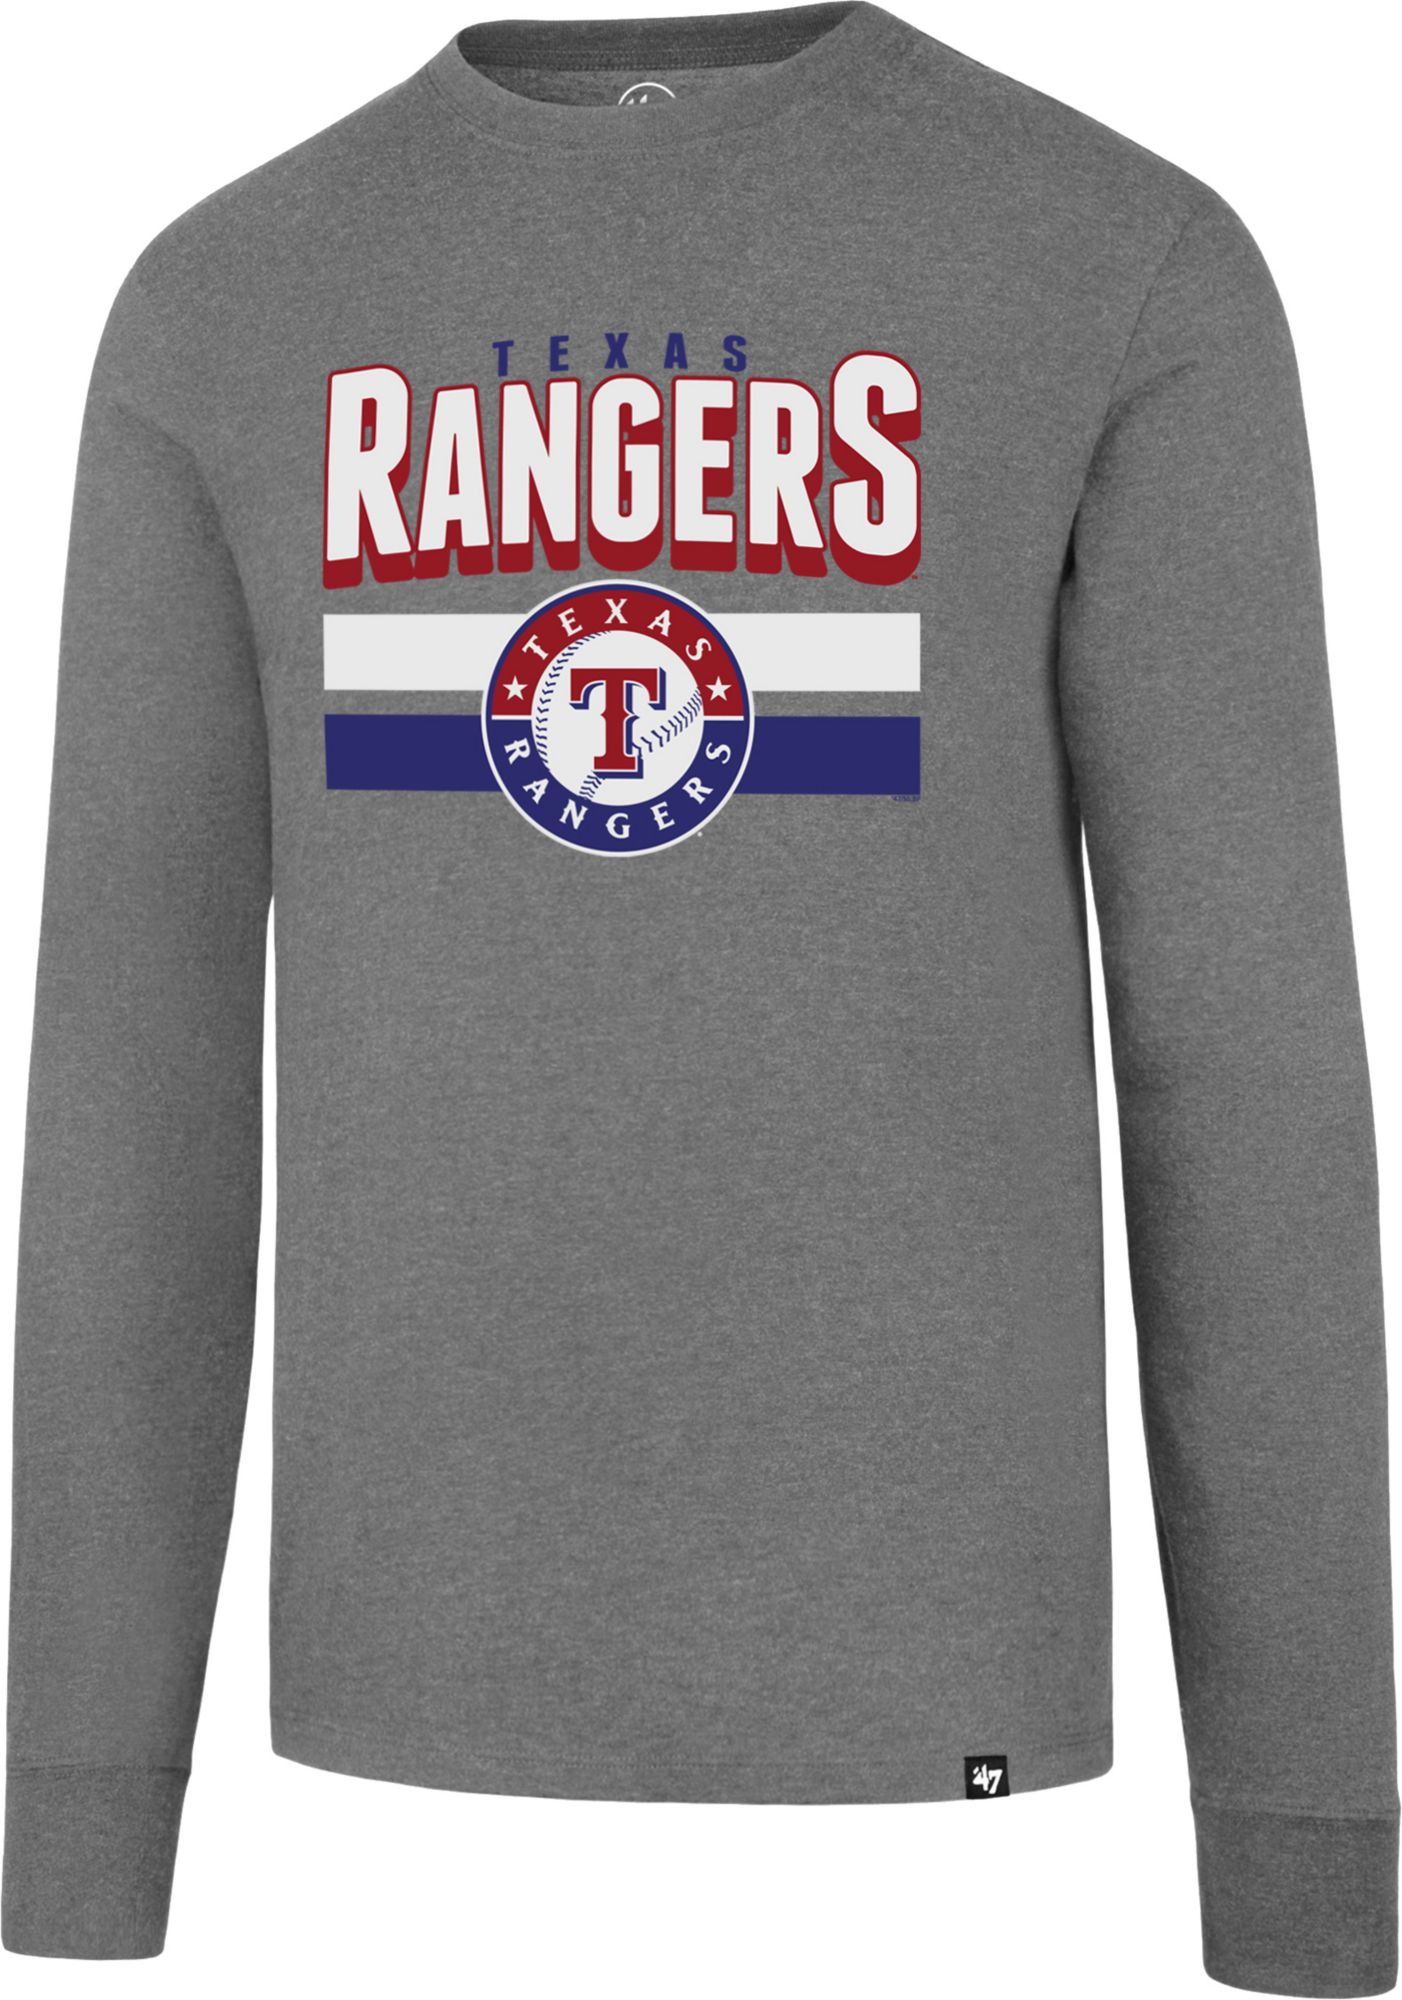 texas rangers long sleeve t shirt